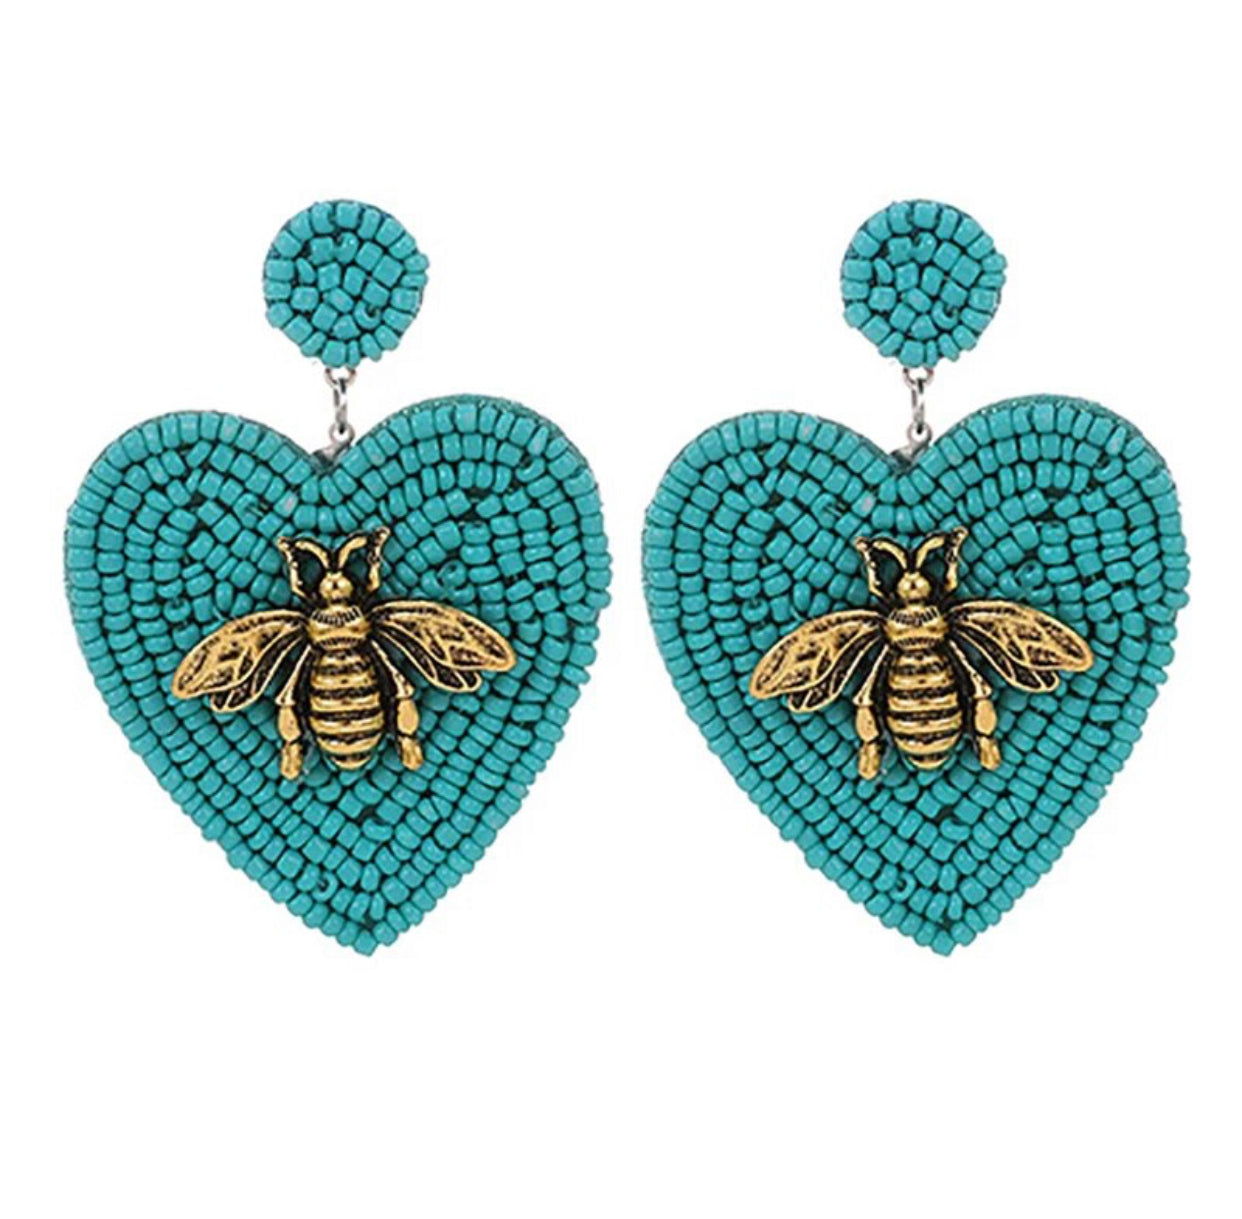 Turquoise Beaded Heart Earrings